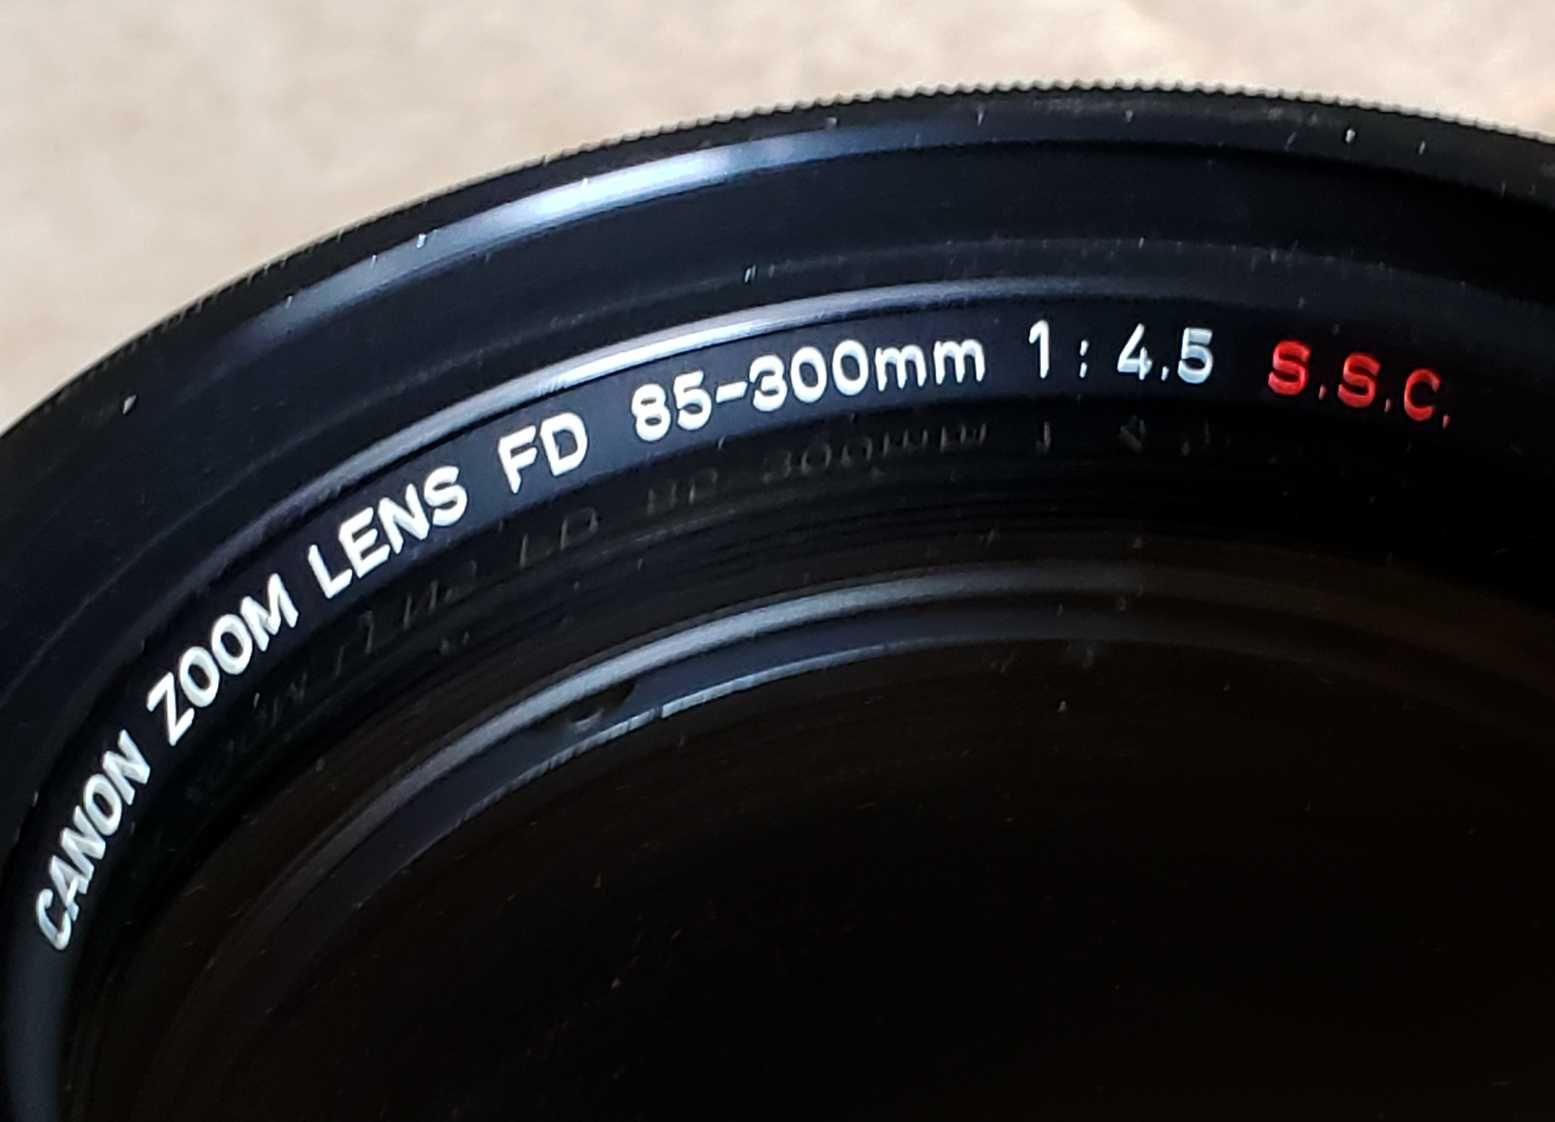 Canon FD 85-300mm f/4.5 S.S.C. zoom lens об'єктив  в хорошому стані